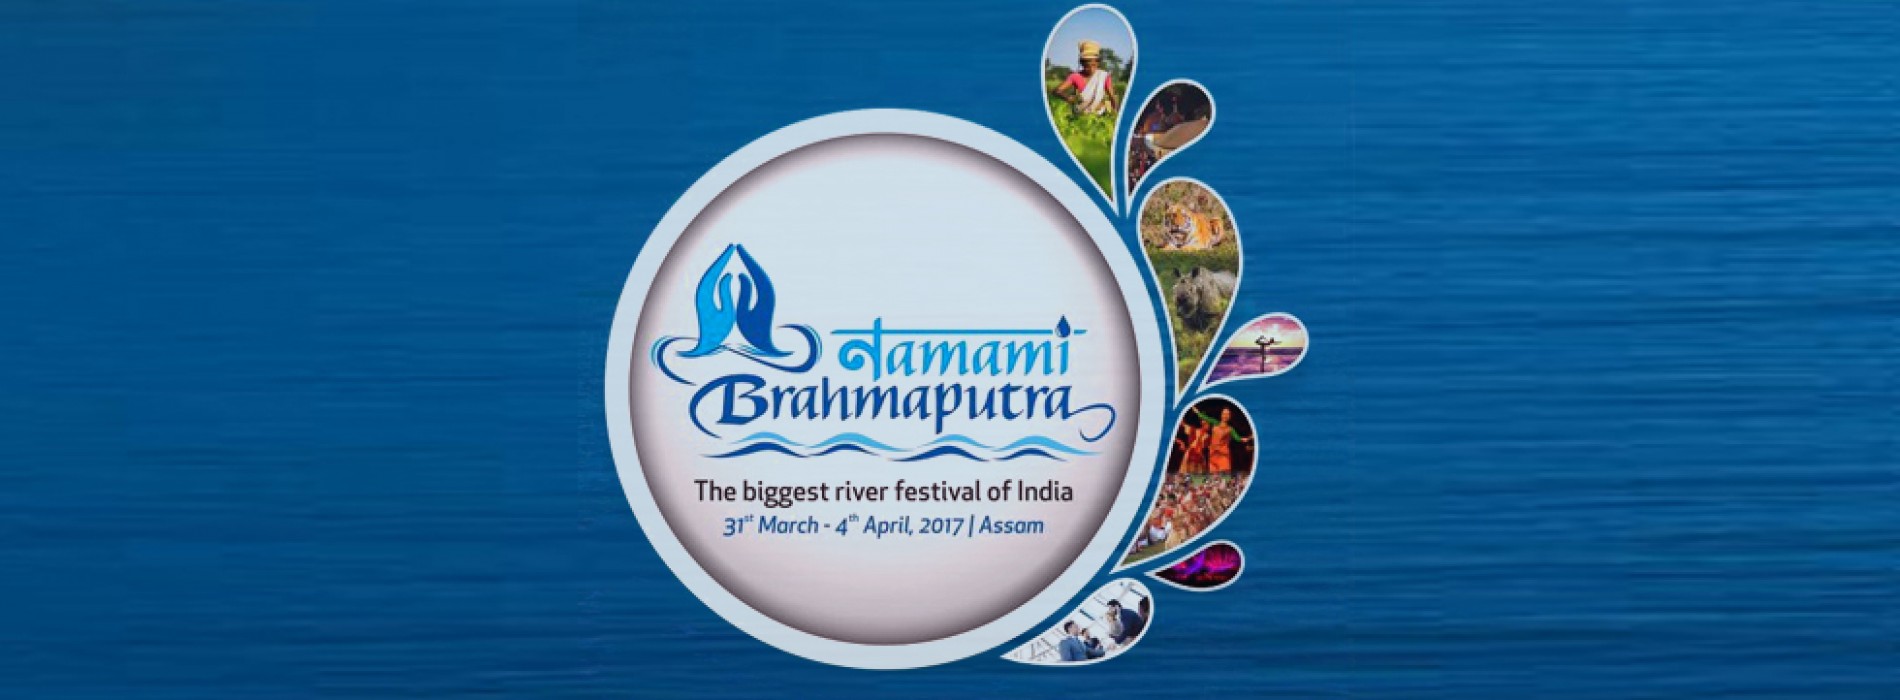 Namami Brahmaputra festival to begin soon